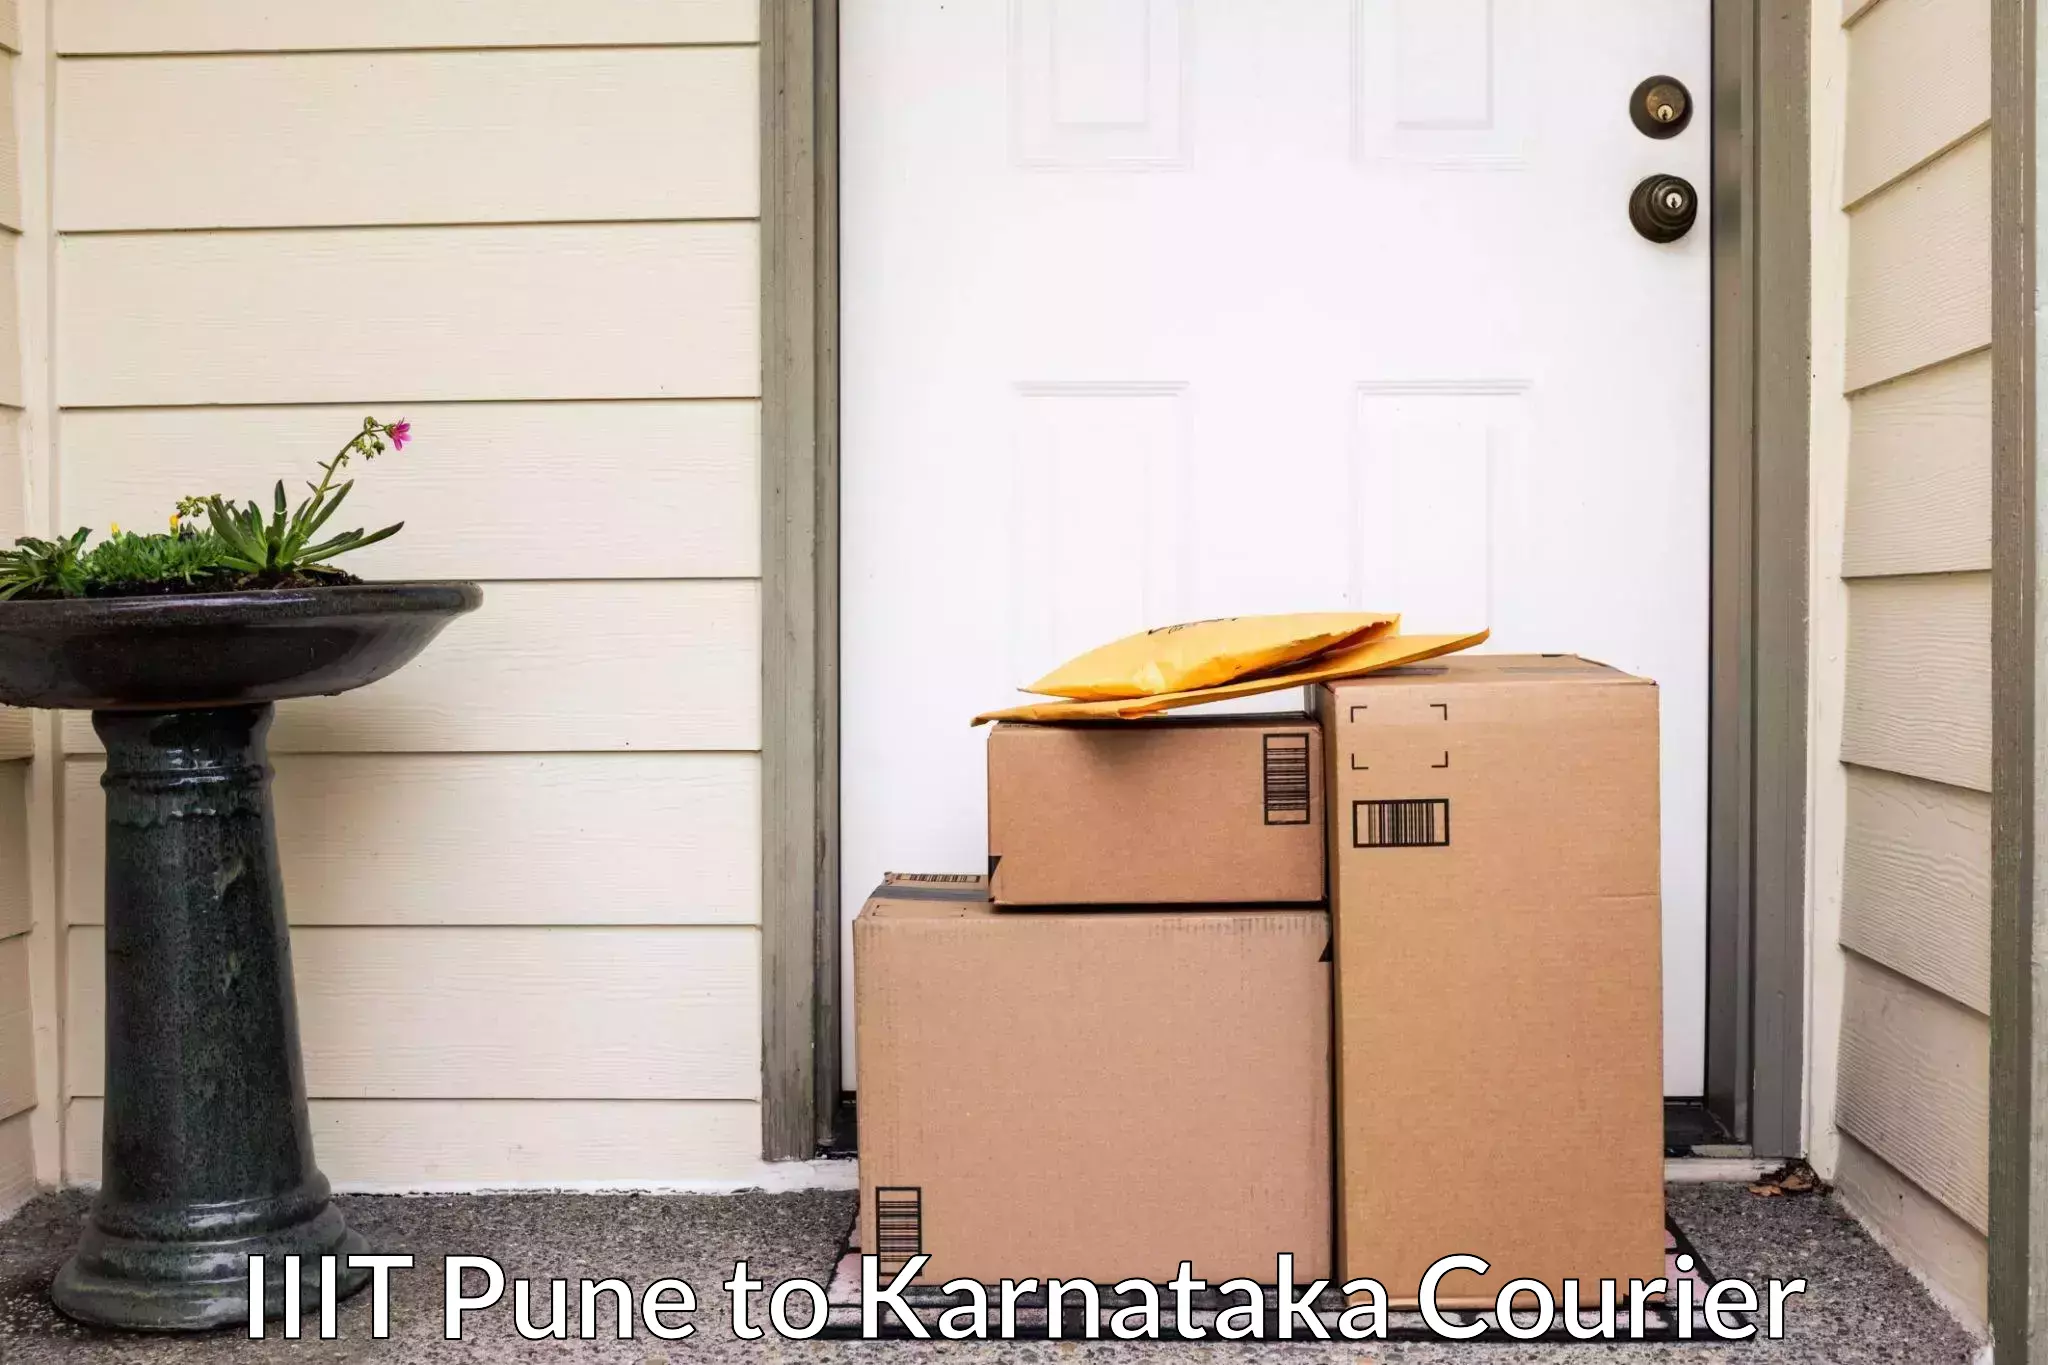 Professional packing and transport IIIT Pune to Karnataka